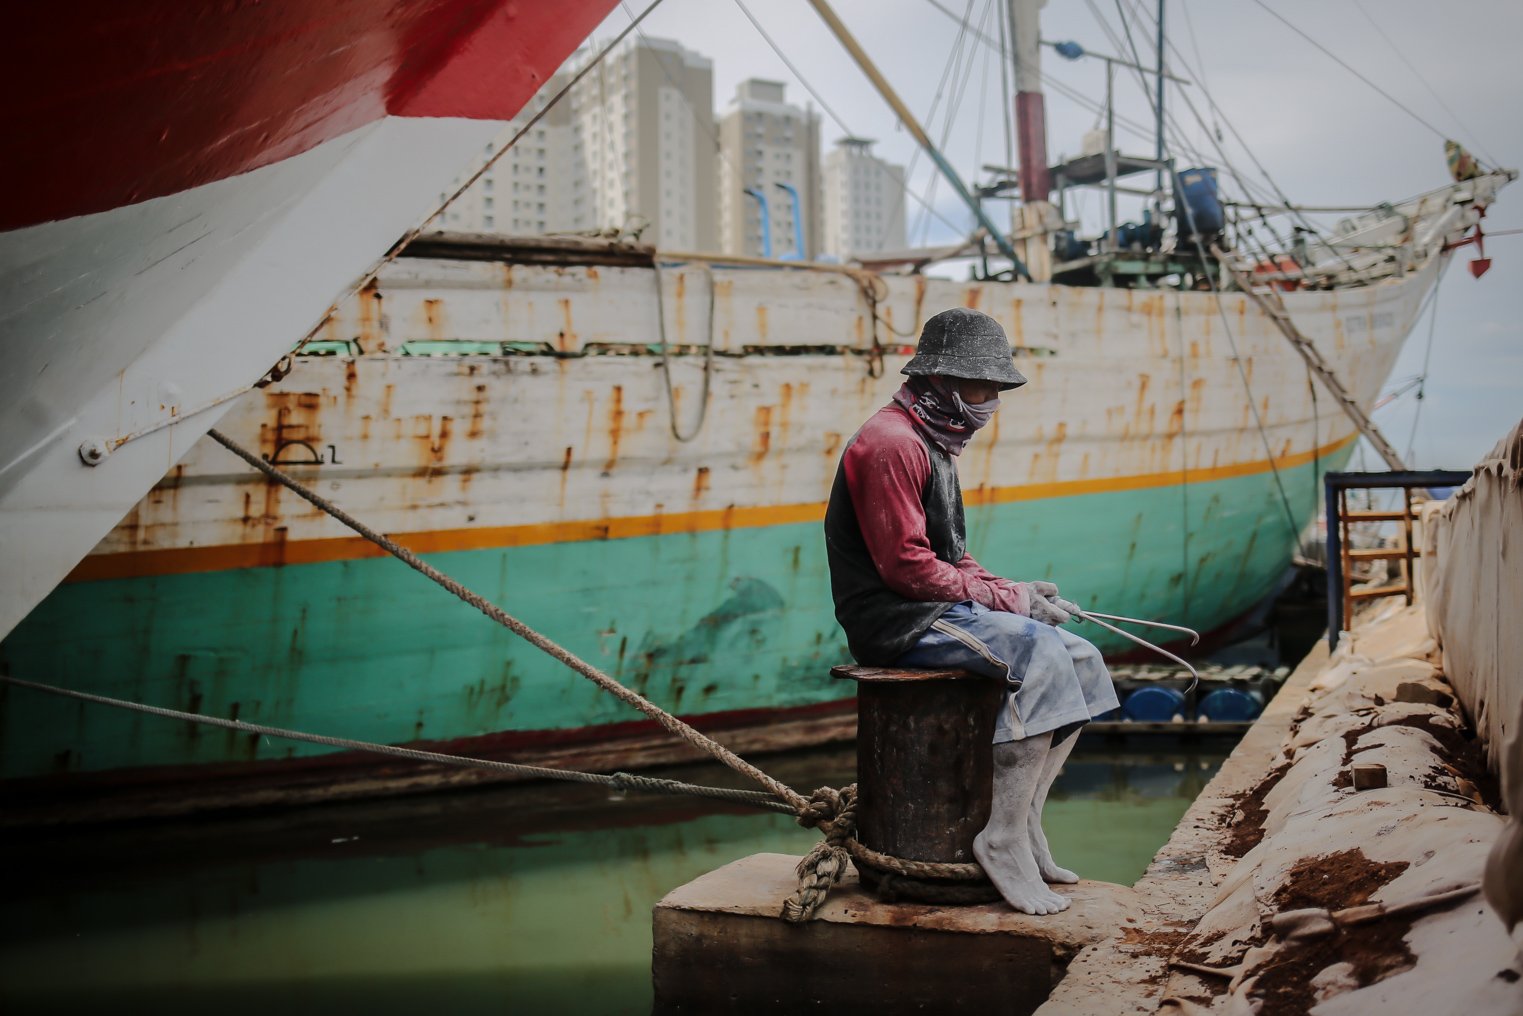 Buruh pengangkut berisitirahat usai memuat barang logistik ke dalam kapal di Pelabuhan Sunda Kelapa, Jakarta, Senin (7/2/2022). Badan Pusat Statistik (BPS) mencatat pertumbuhan ekonomi 2021 mencapai 3,69%, lebih baik dibandingkan tahun 2020 yang mengalami kontraksi 2,07%. Namun, angka ini berada di bawah proyeksi Menteri Keuangan Sri Mulyani sebesar 4%.